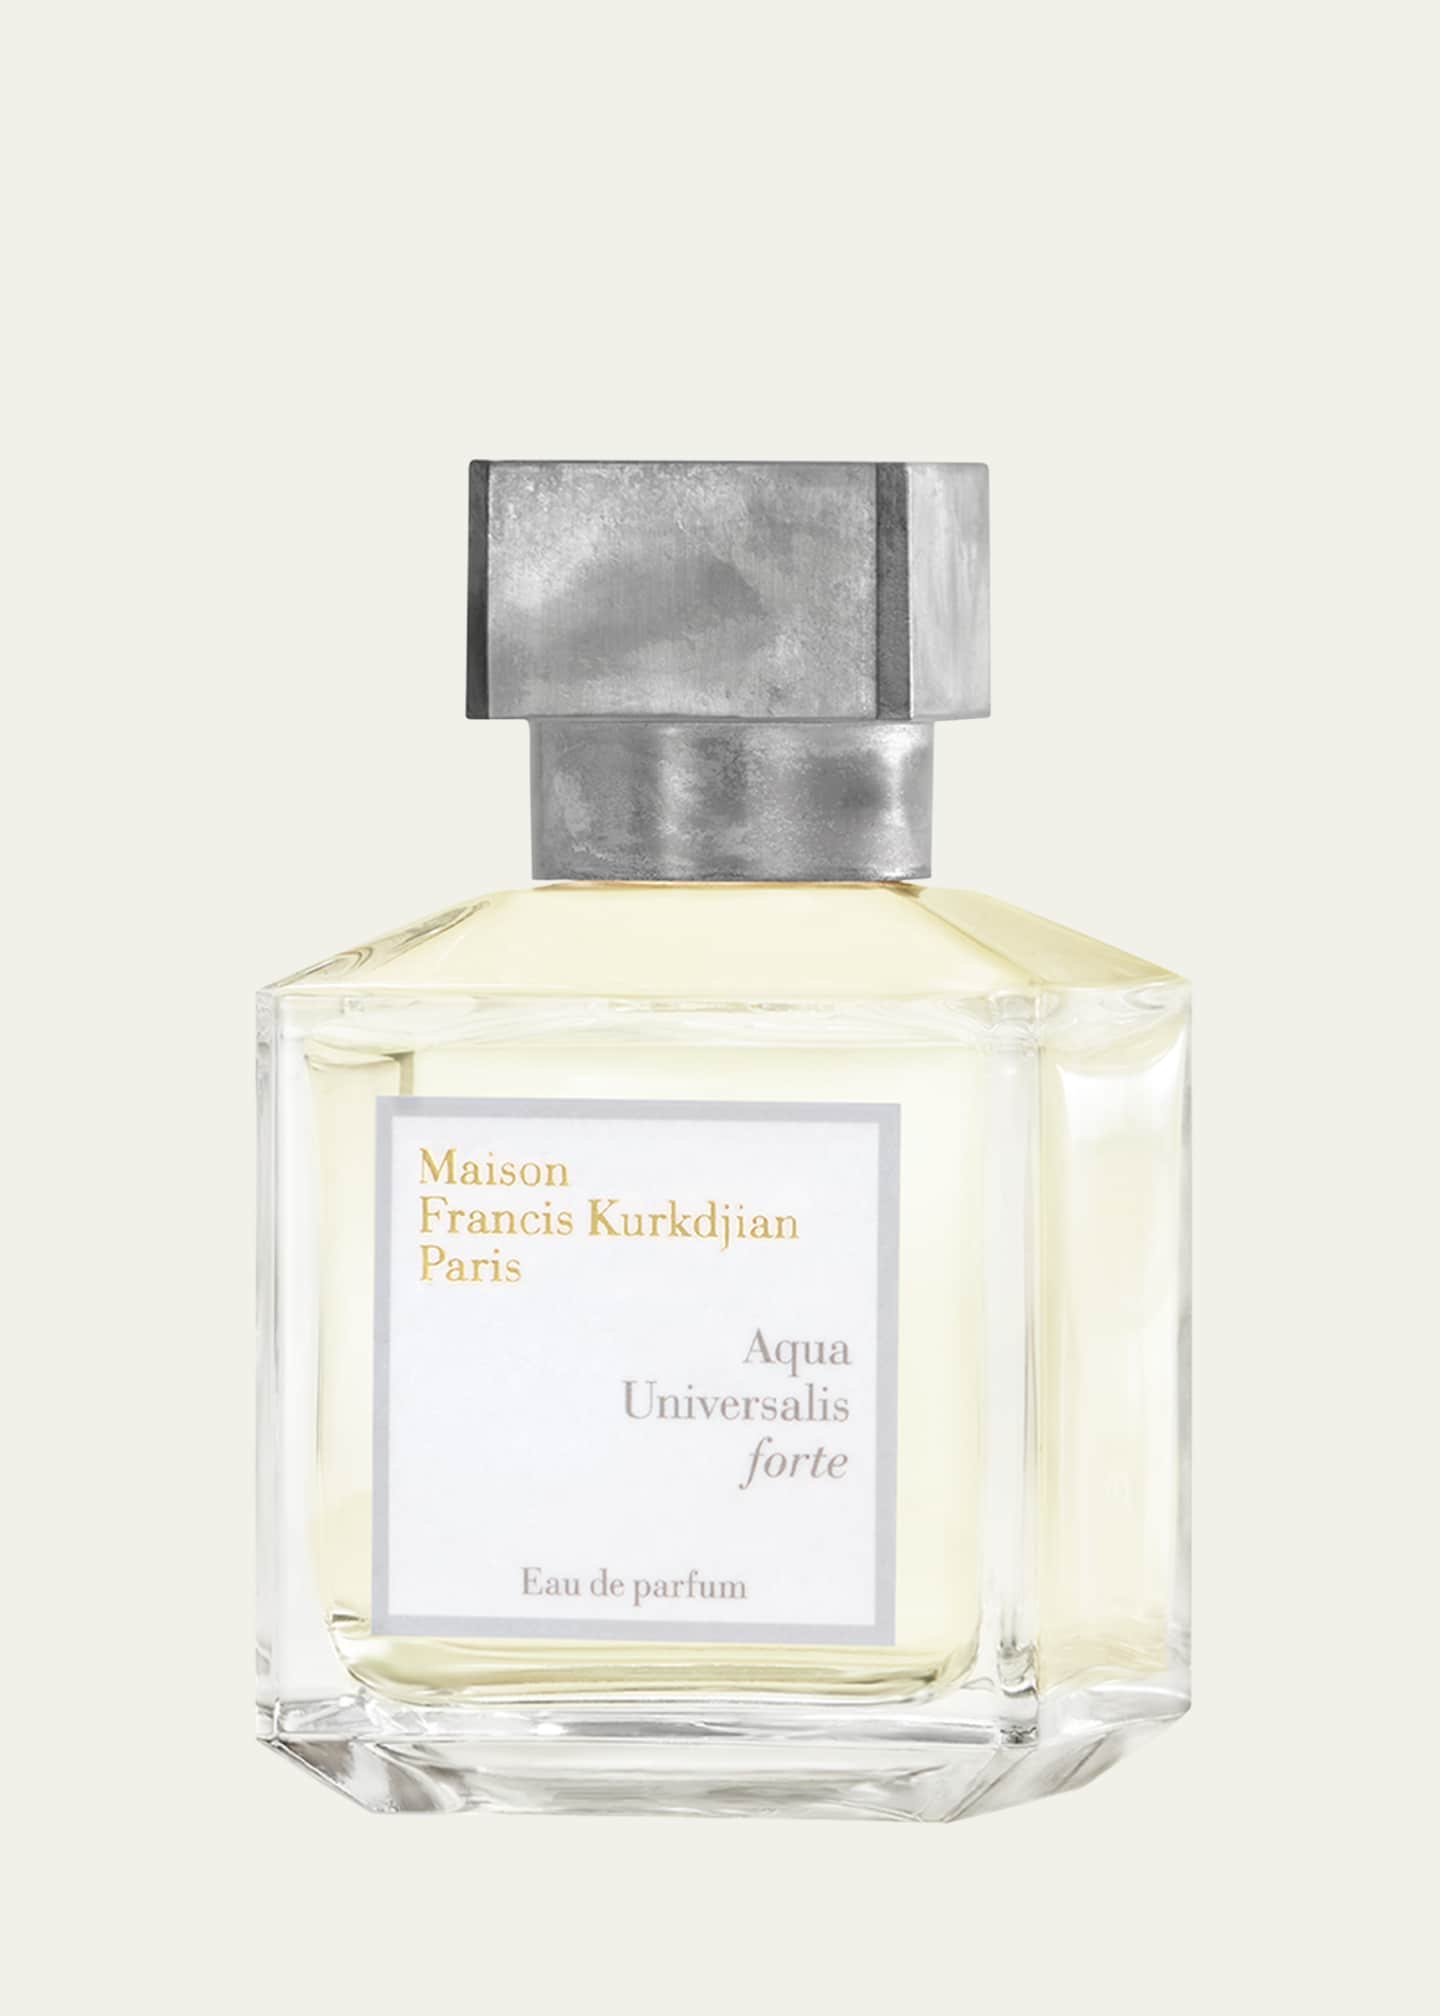 Maison Francis Kurkdjian Aqua Universalis forte Eau de Parfum, 2.4 oz.